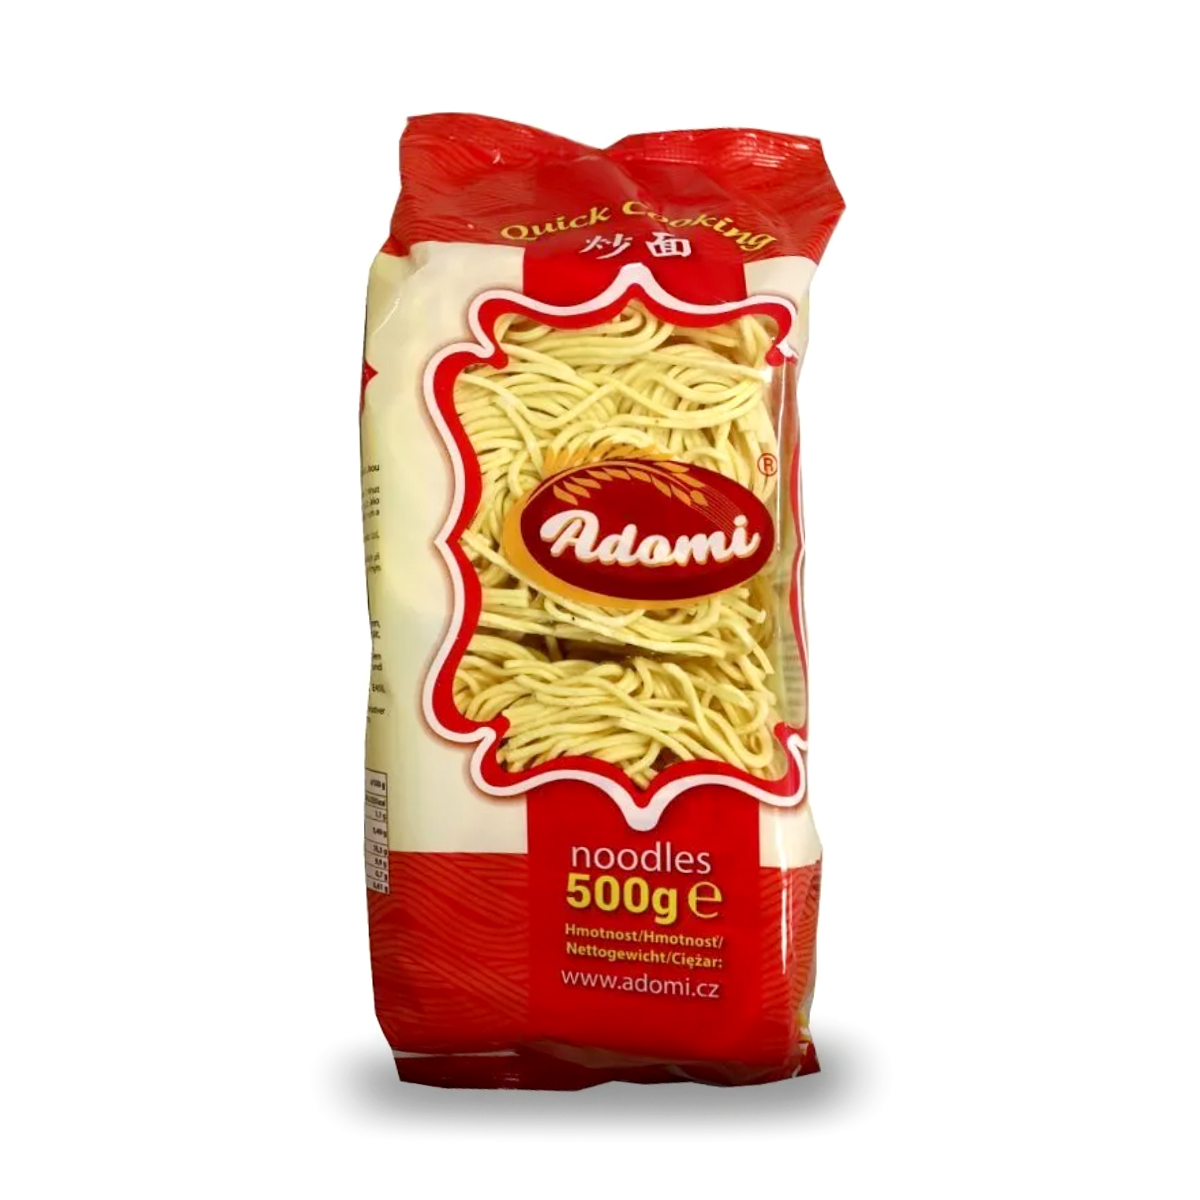 Taitei de grau - Taitei din grau (ramen noodles) ADOMI 500g, asianfood.ro